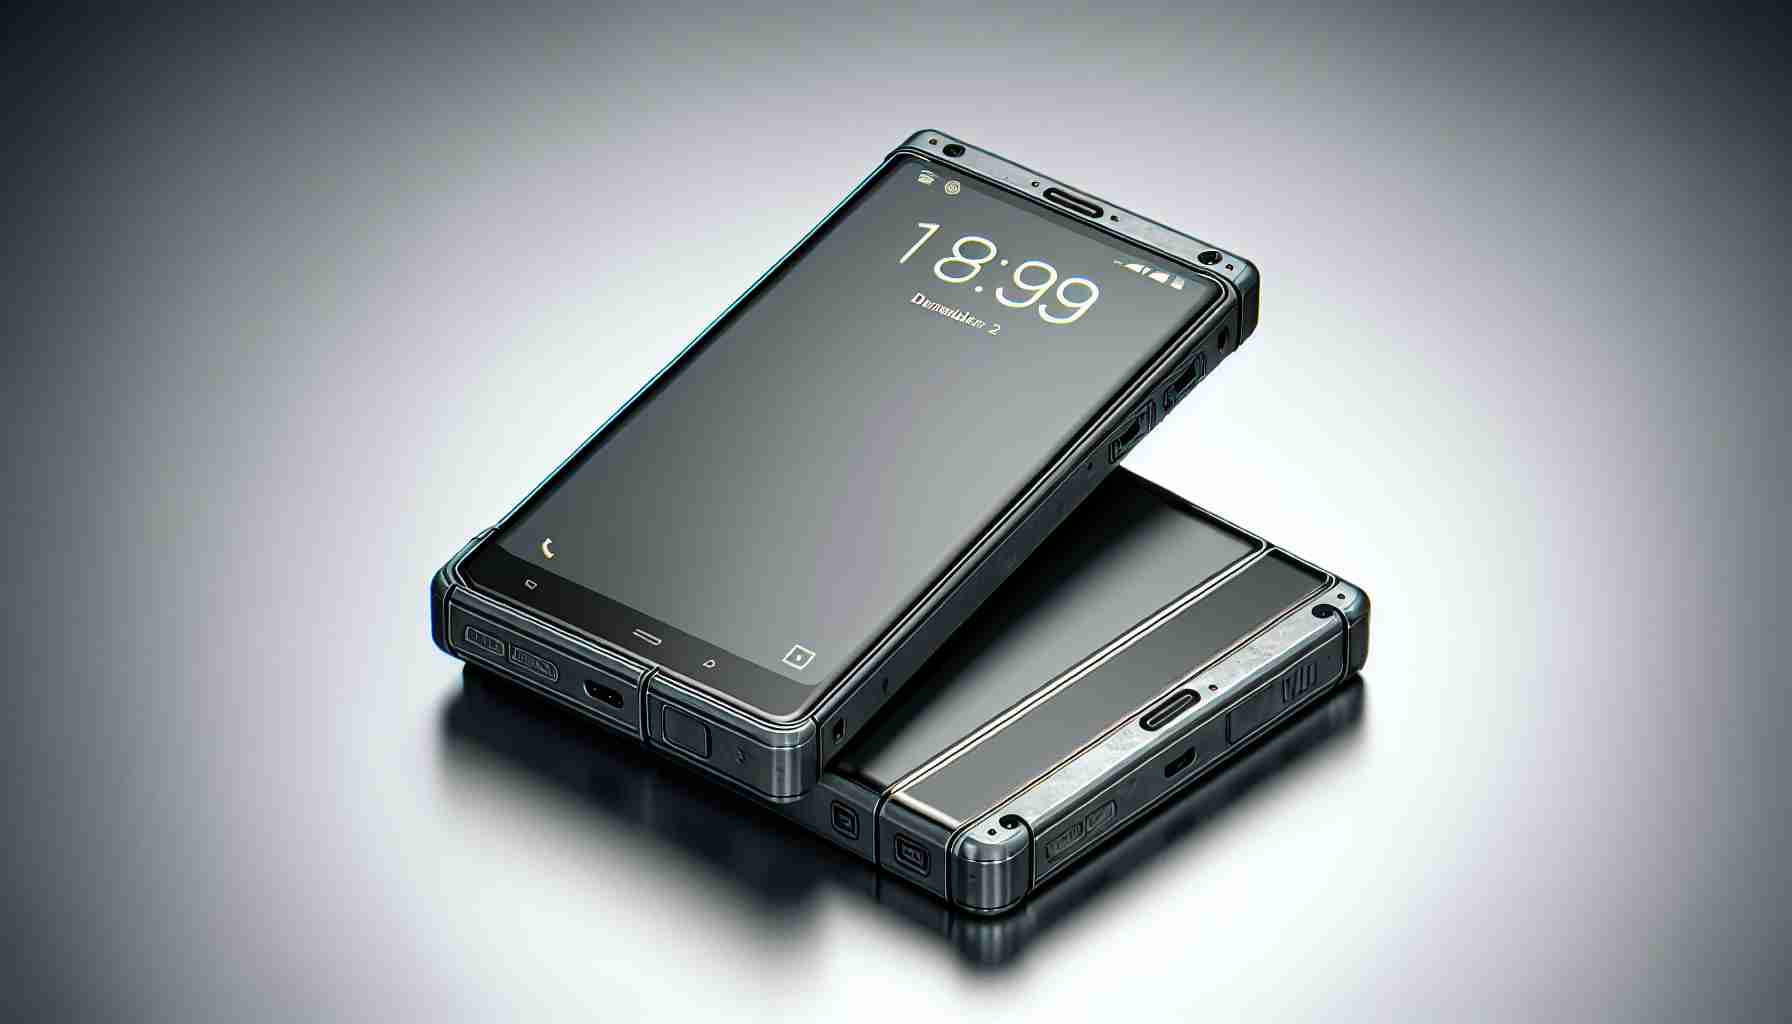 Sony Ericsson Xperia X10 Release Date